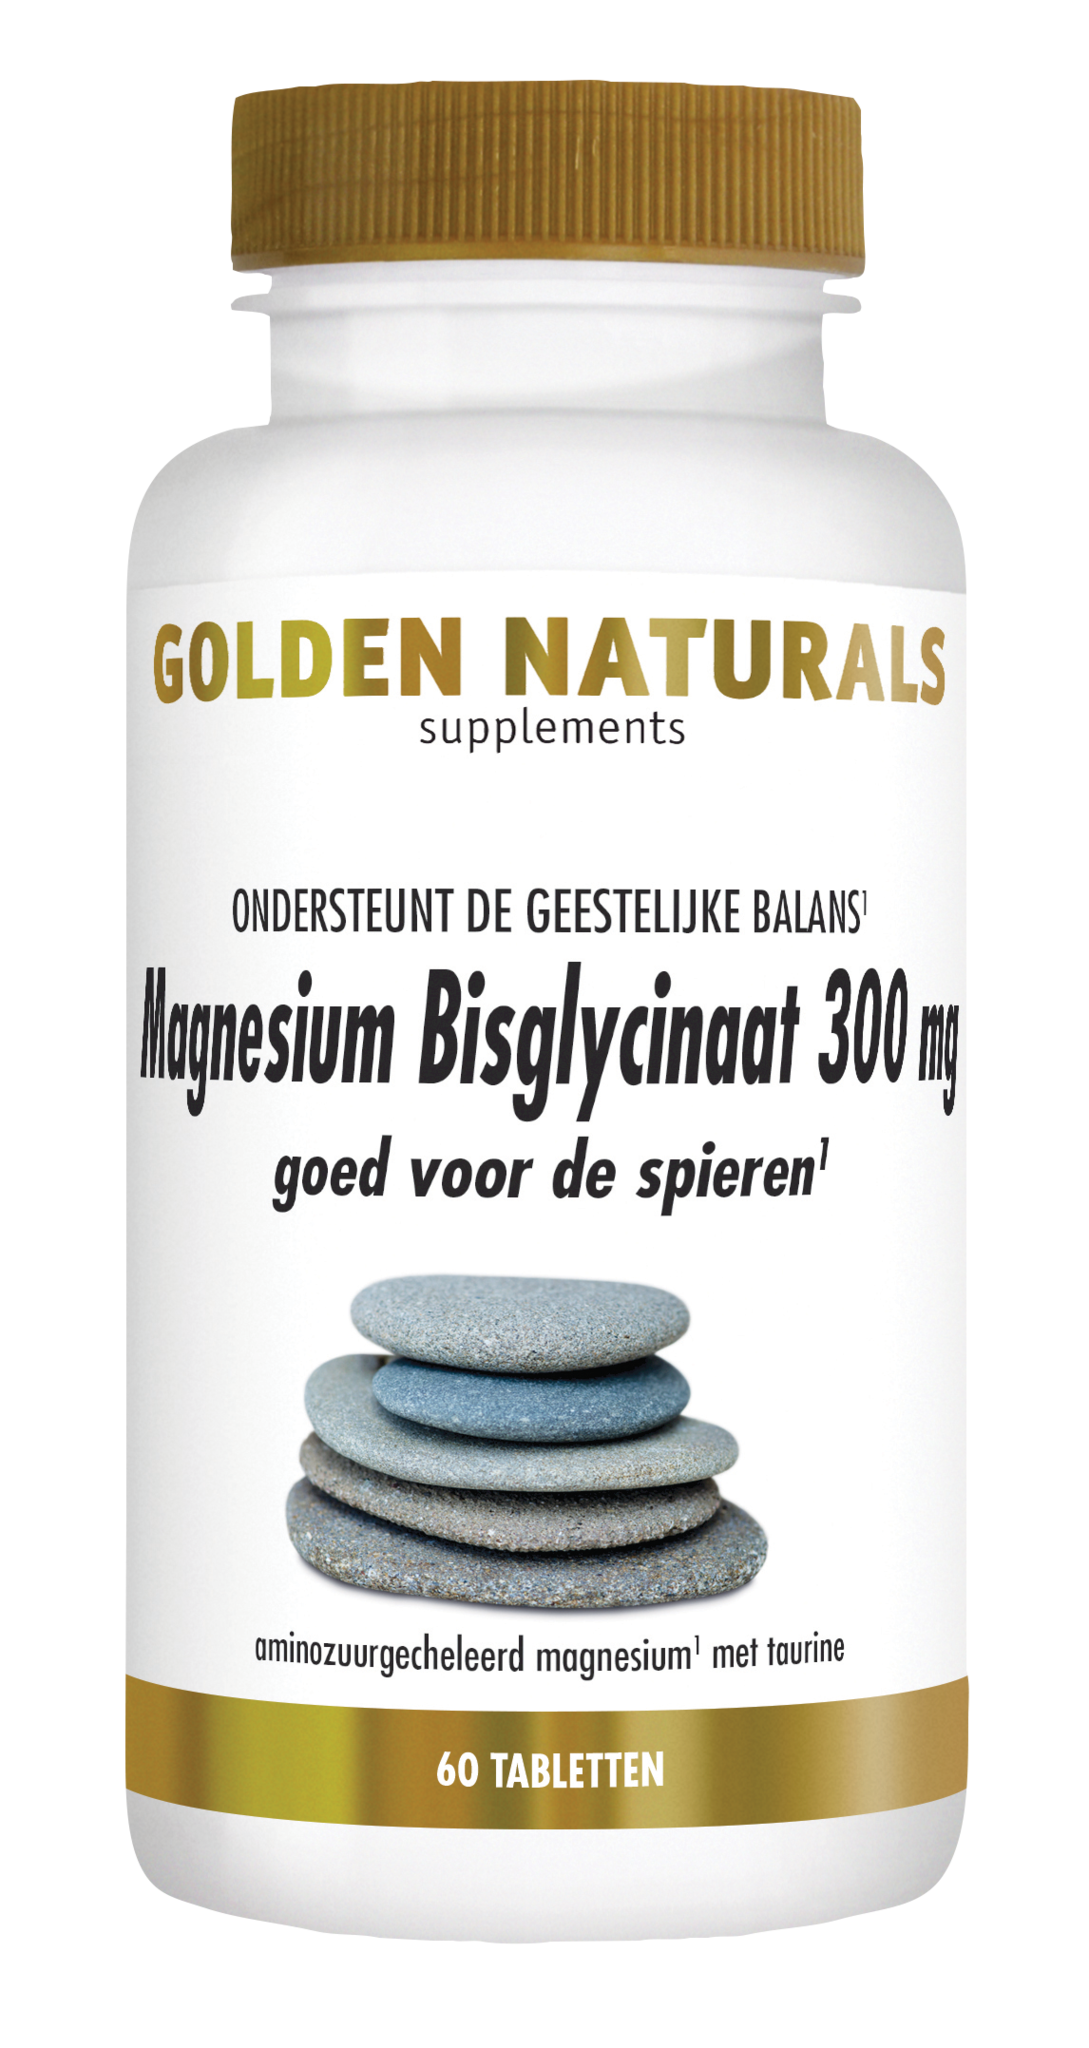 Golden Naturals Golden Naturals Magnesium Bisglycinaat 300 mg Vegan (60 tabl)